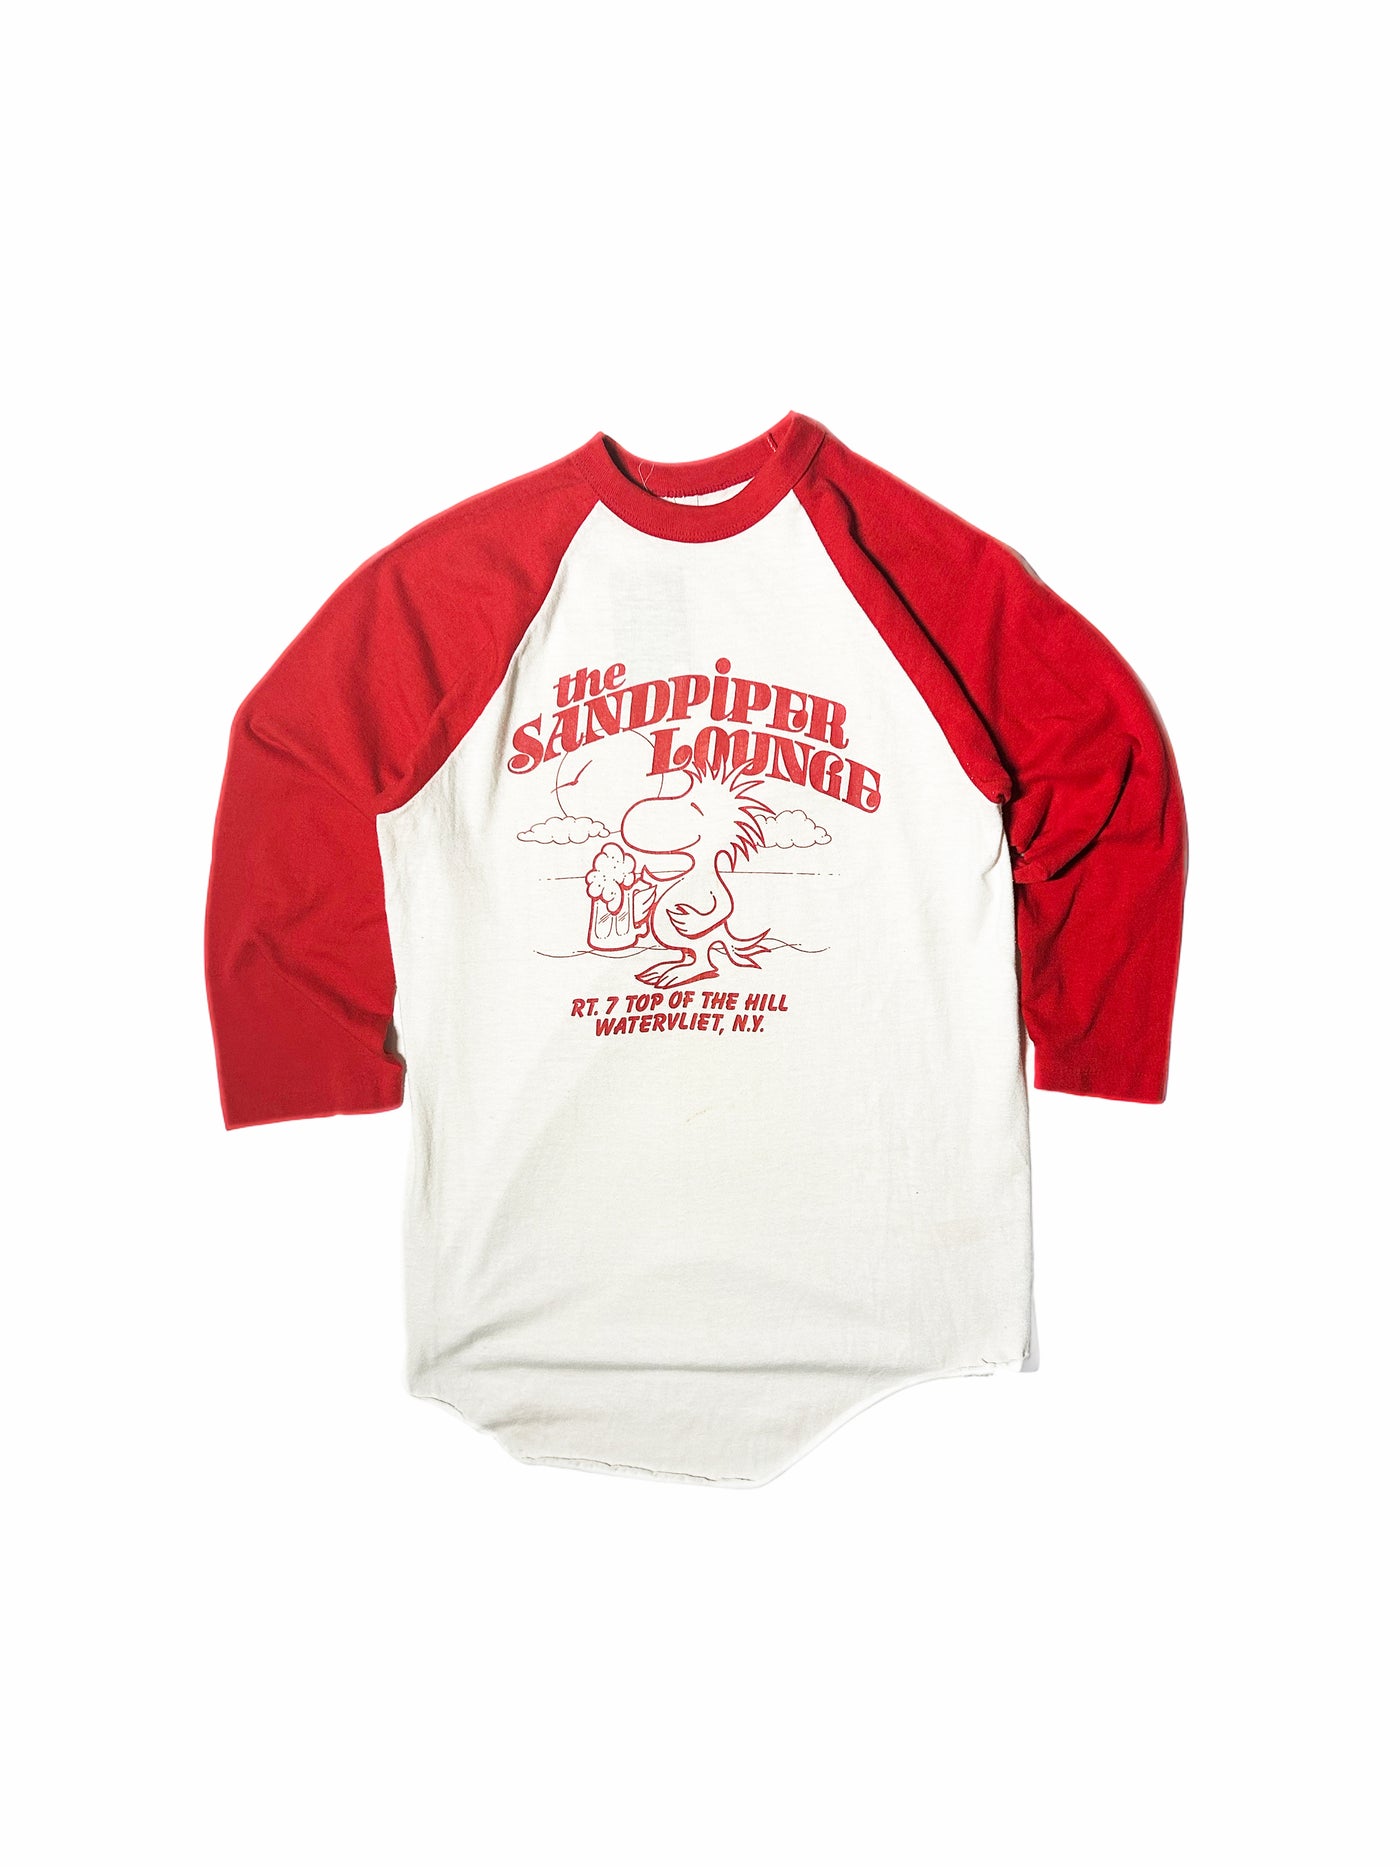 Vintage 80s Sandpiper Lounge Watervliet, NY Baseball Style T-Shirt